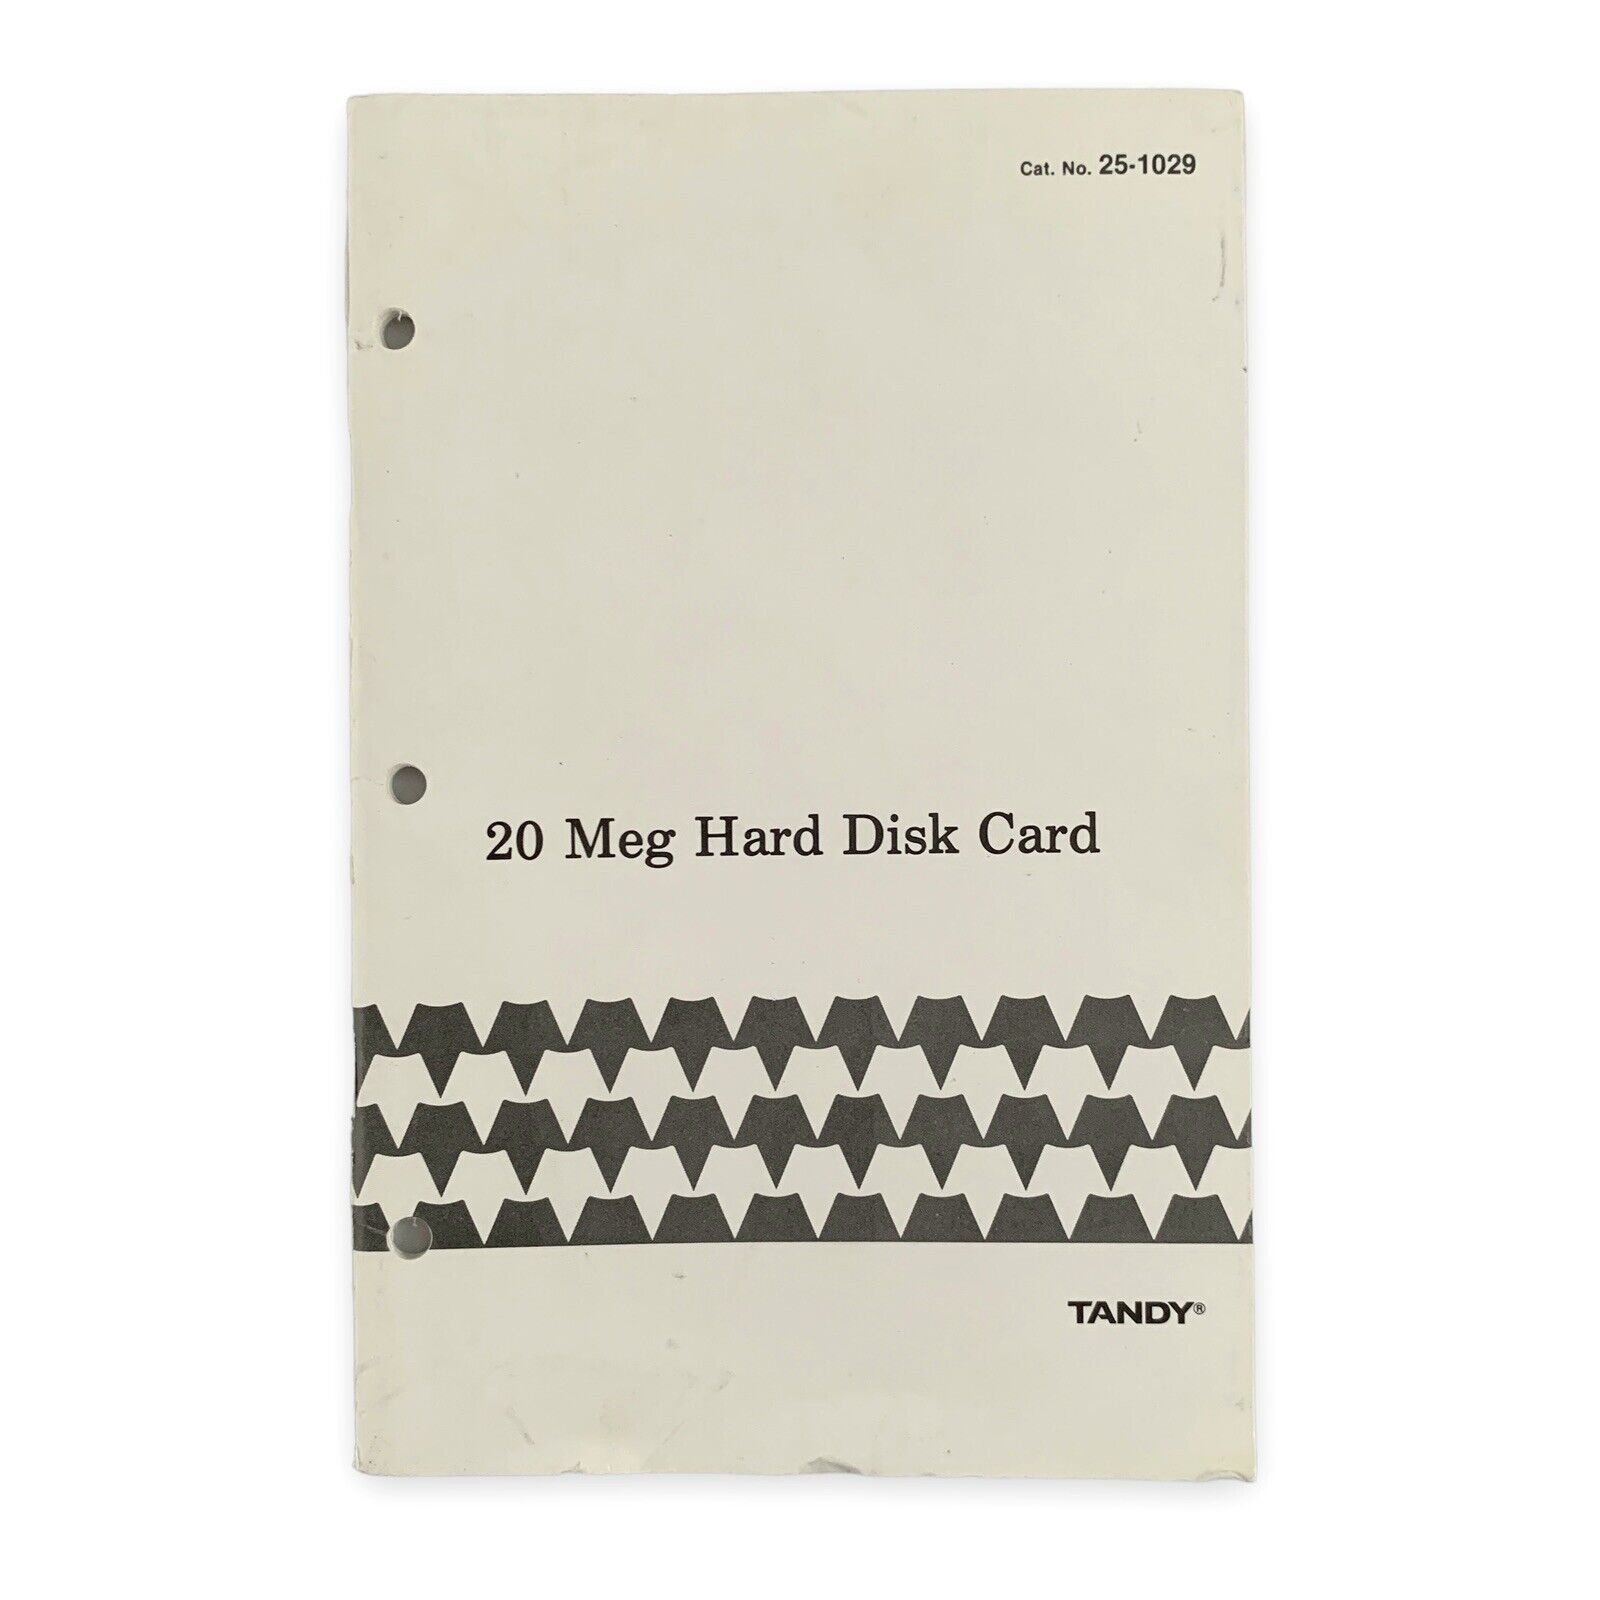 VTG 1988 Tandy 1000 / 1200 / 3000 20 Meg Hard Disk Card Cat No. 25-1029